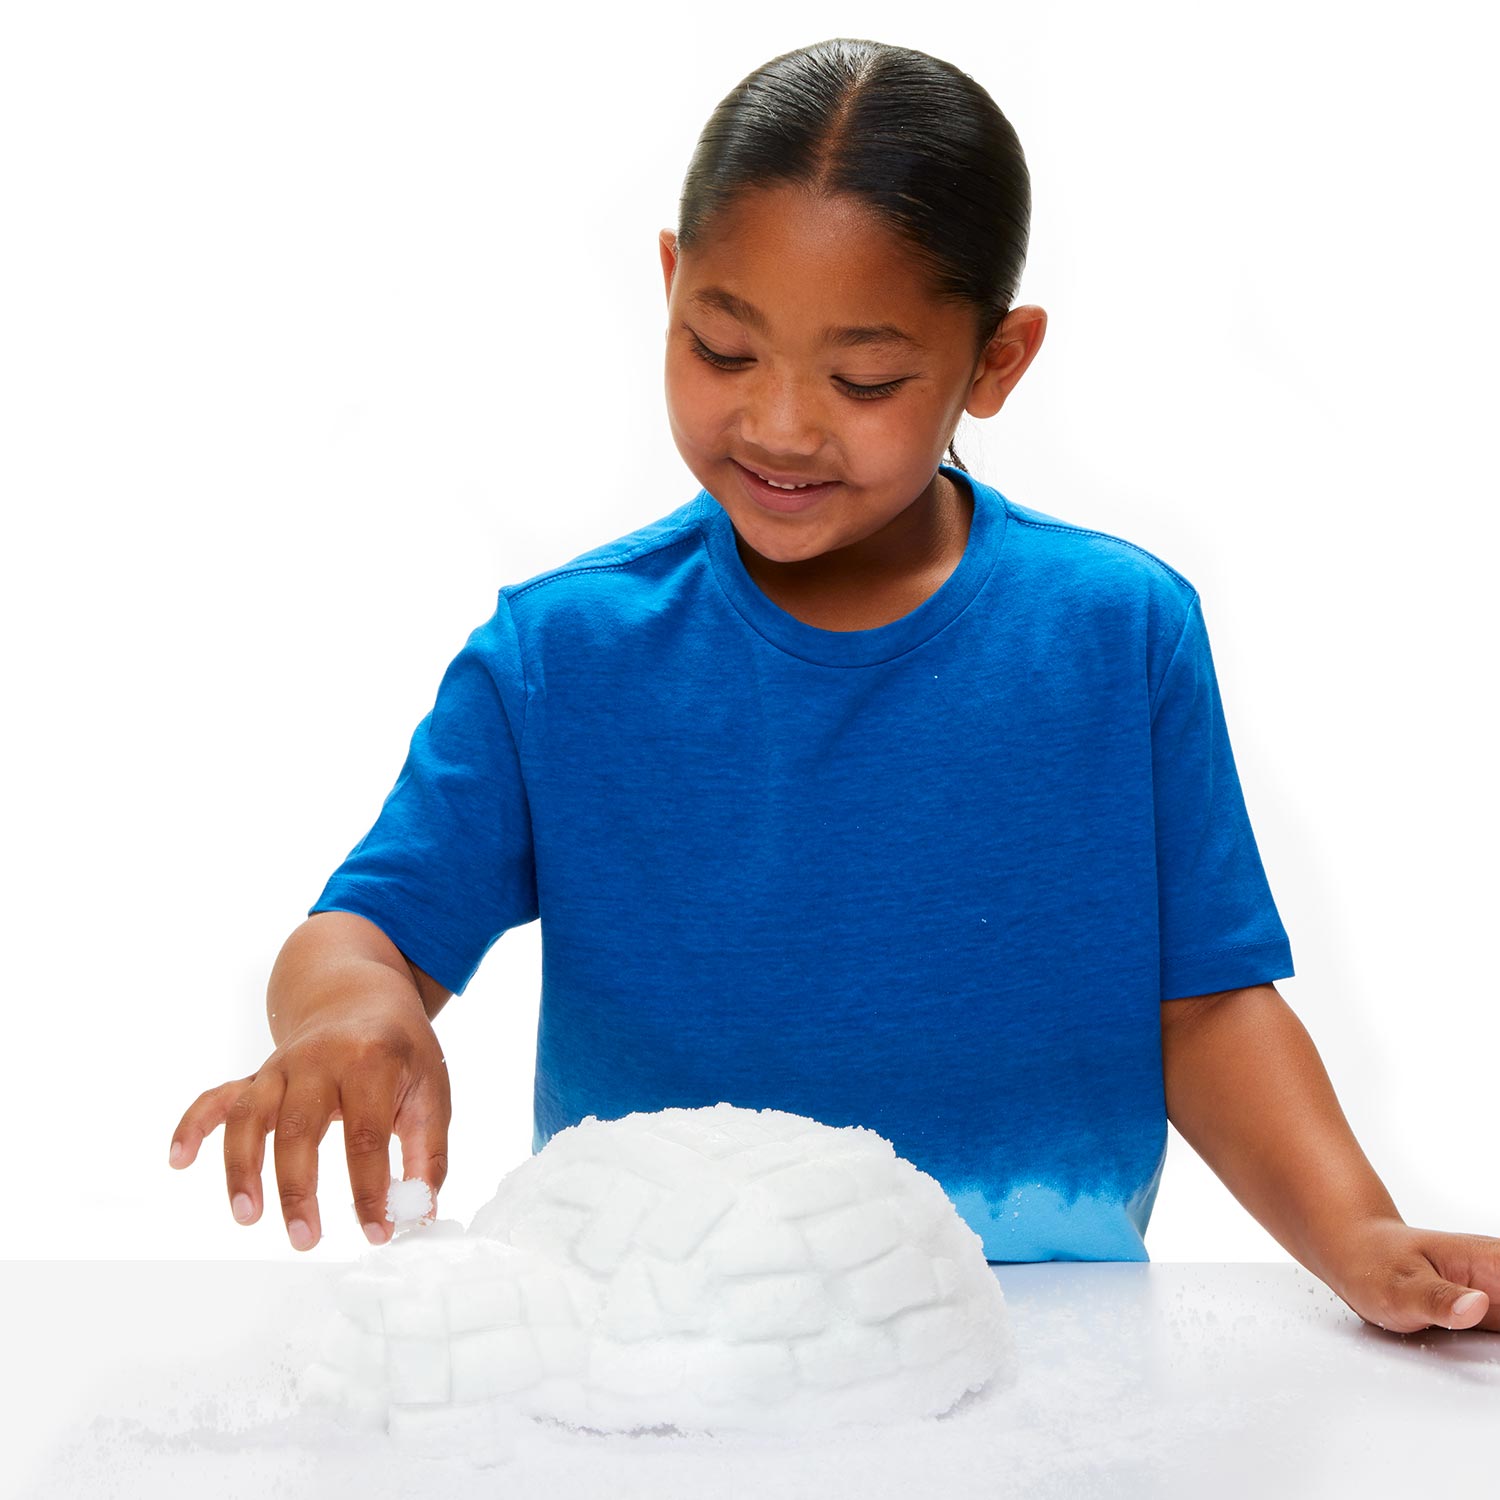 Insta-Snow Powder - Fake Snow (Snow Size: XS) by Steve Spangler Science